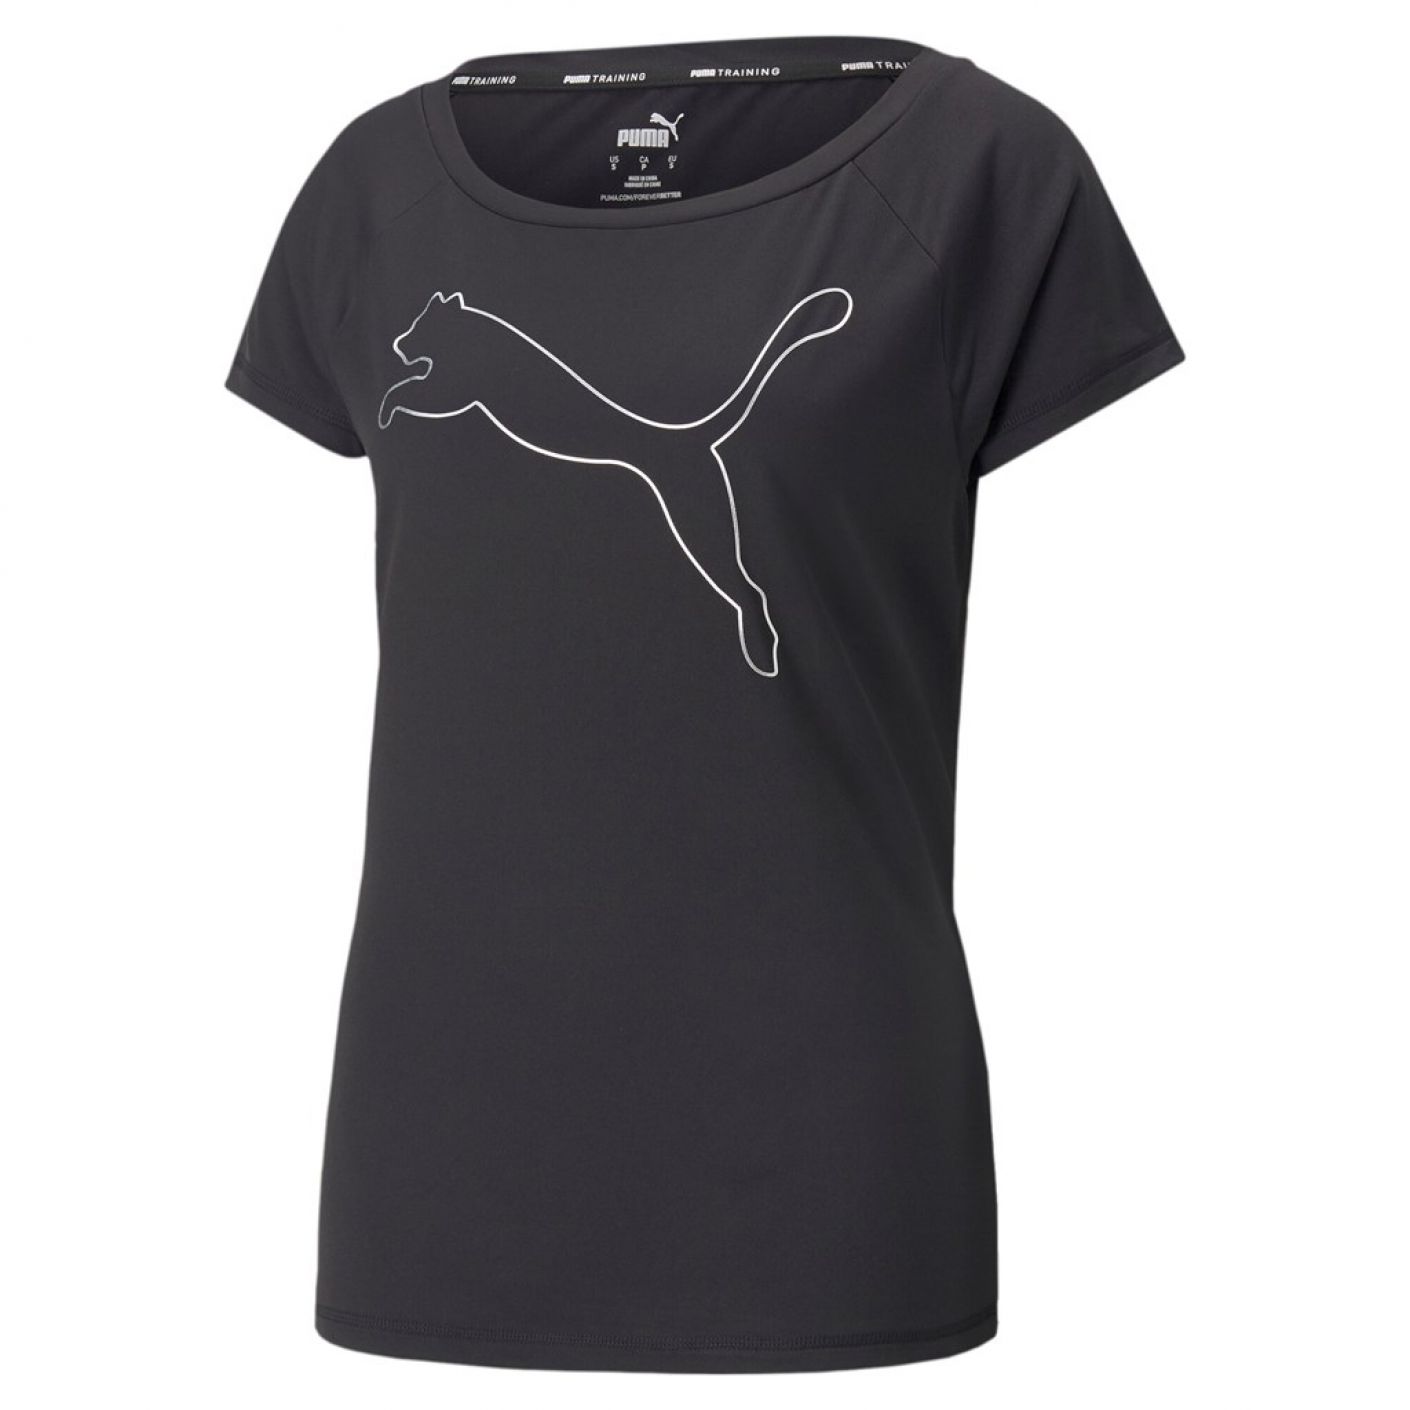 Puma T-Shirt Training Favorite Jersey Cat Black da Donna